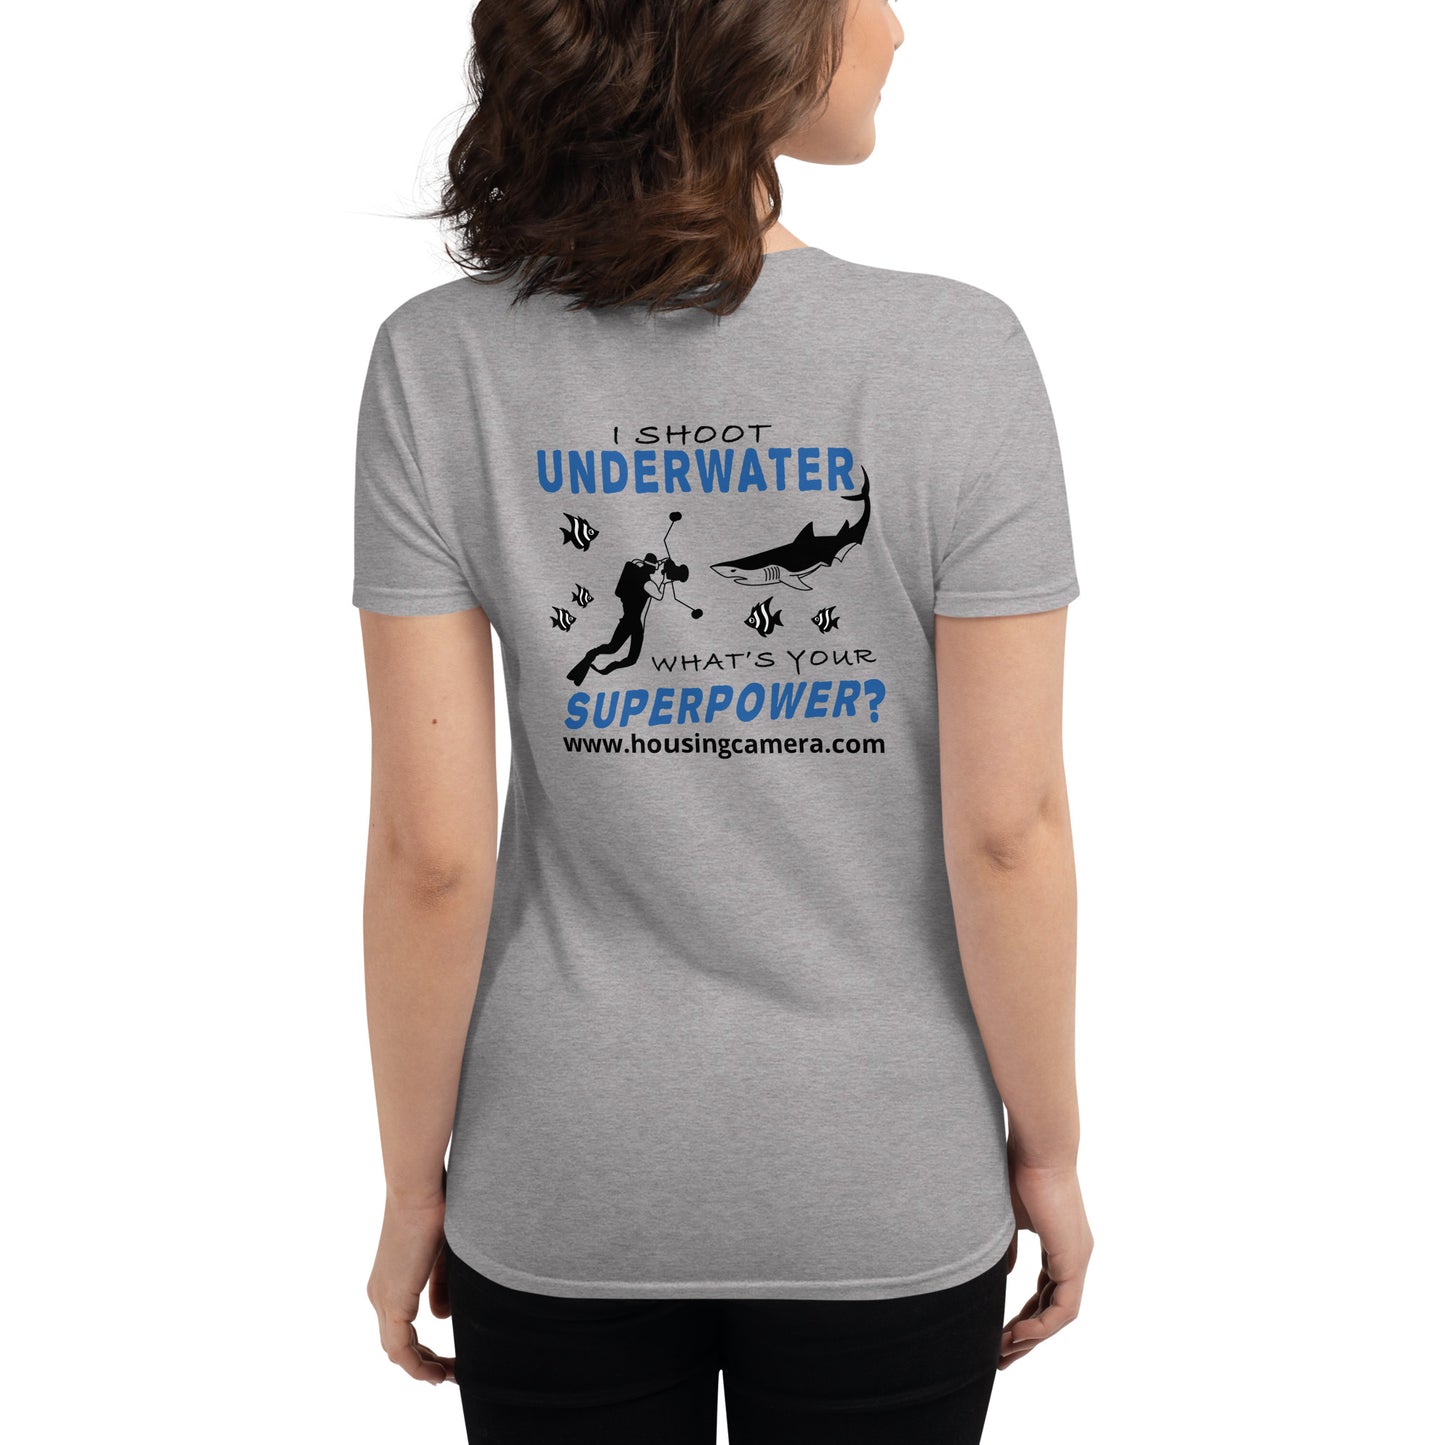 Mozaik - Women's short sleeve t-shirt - Turtle - Underwater Photography Superpower